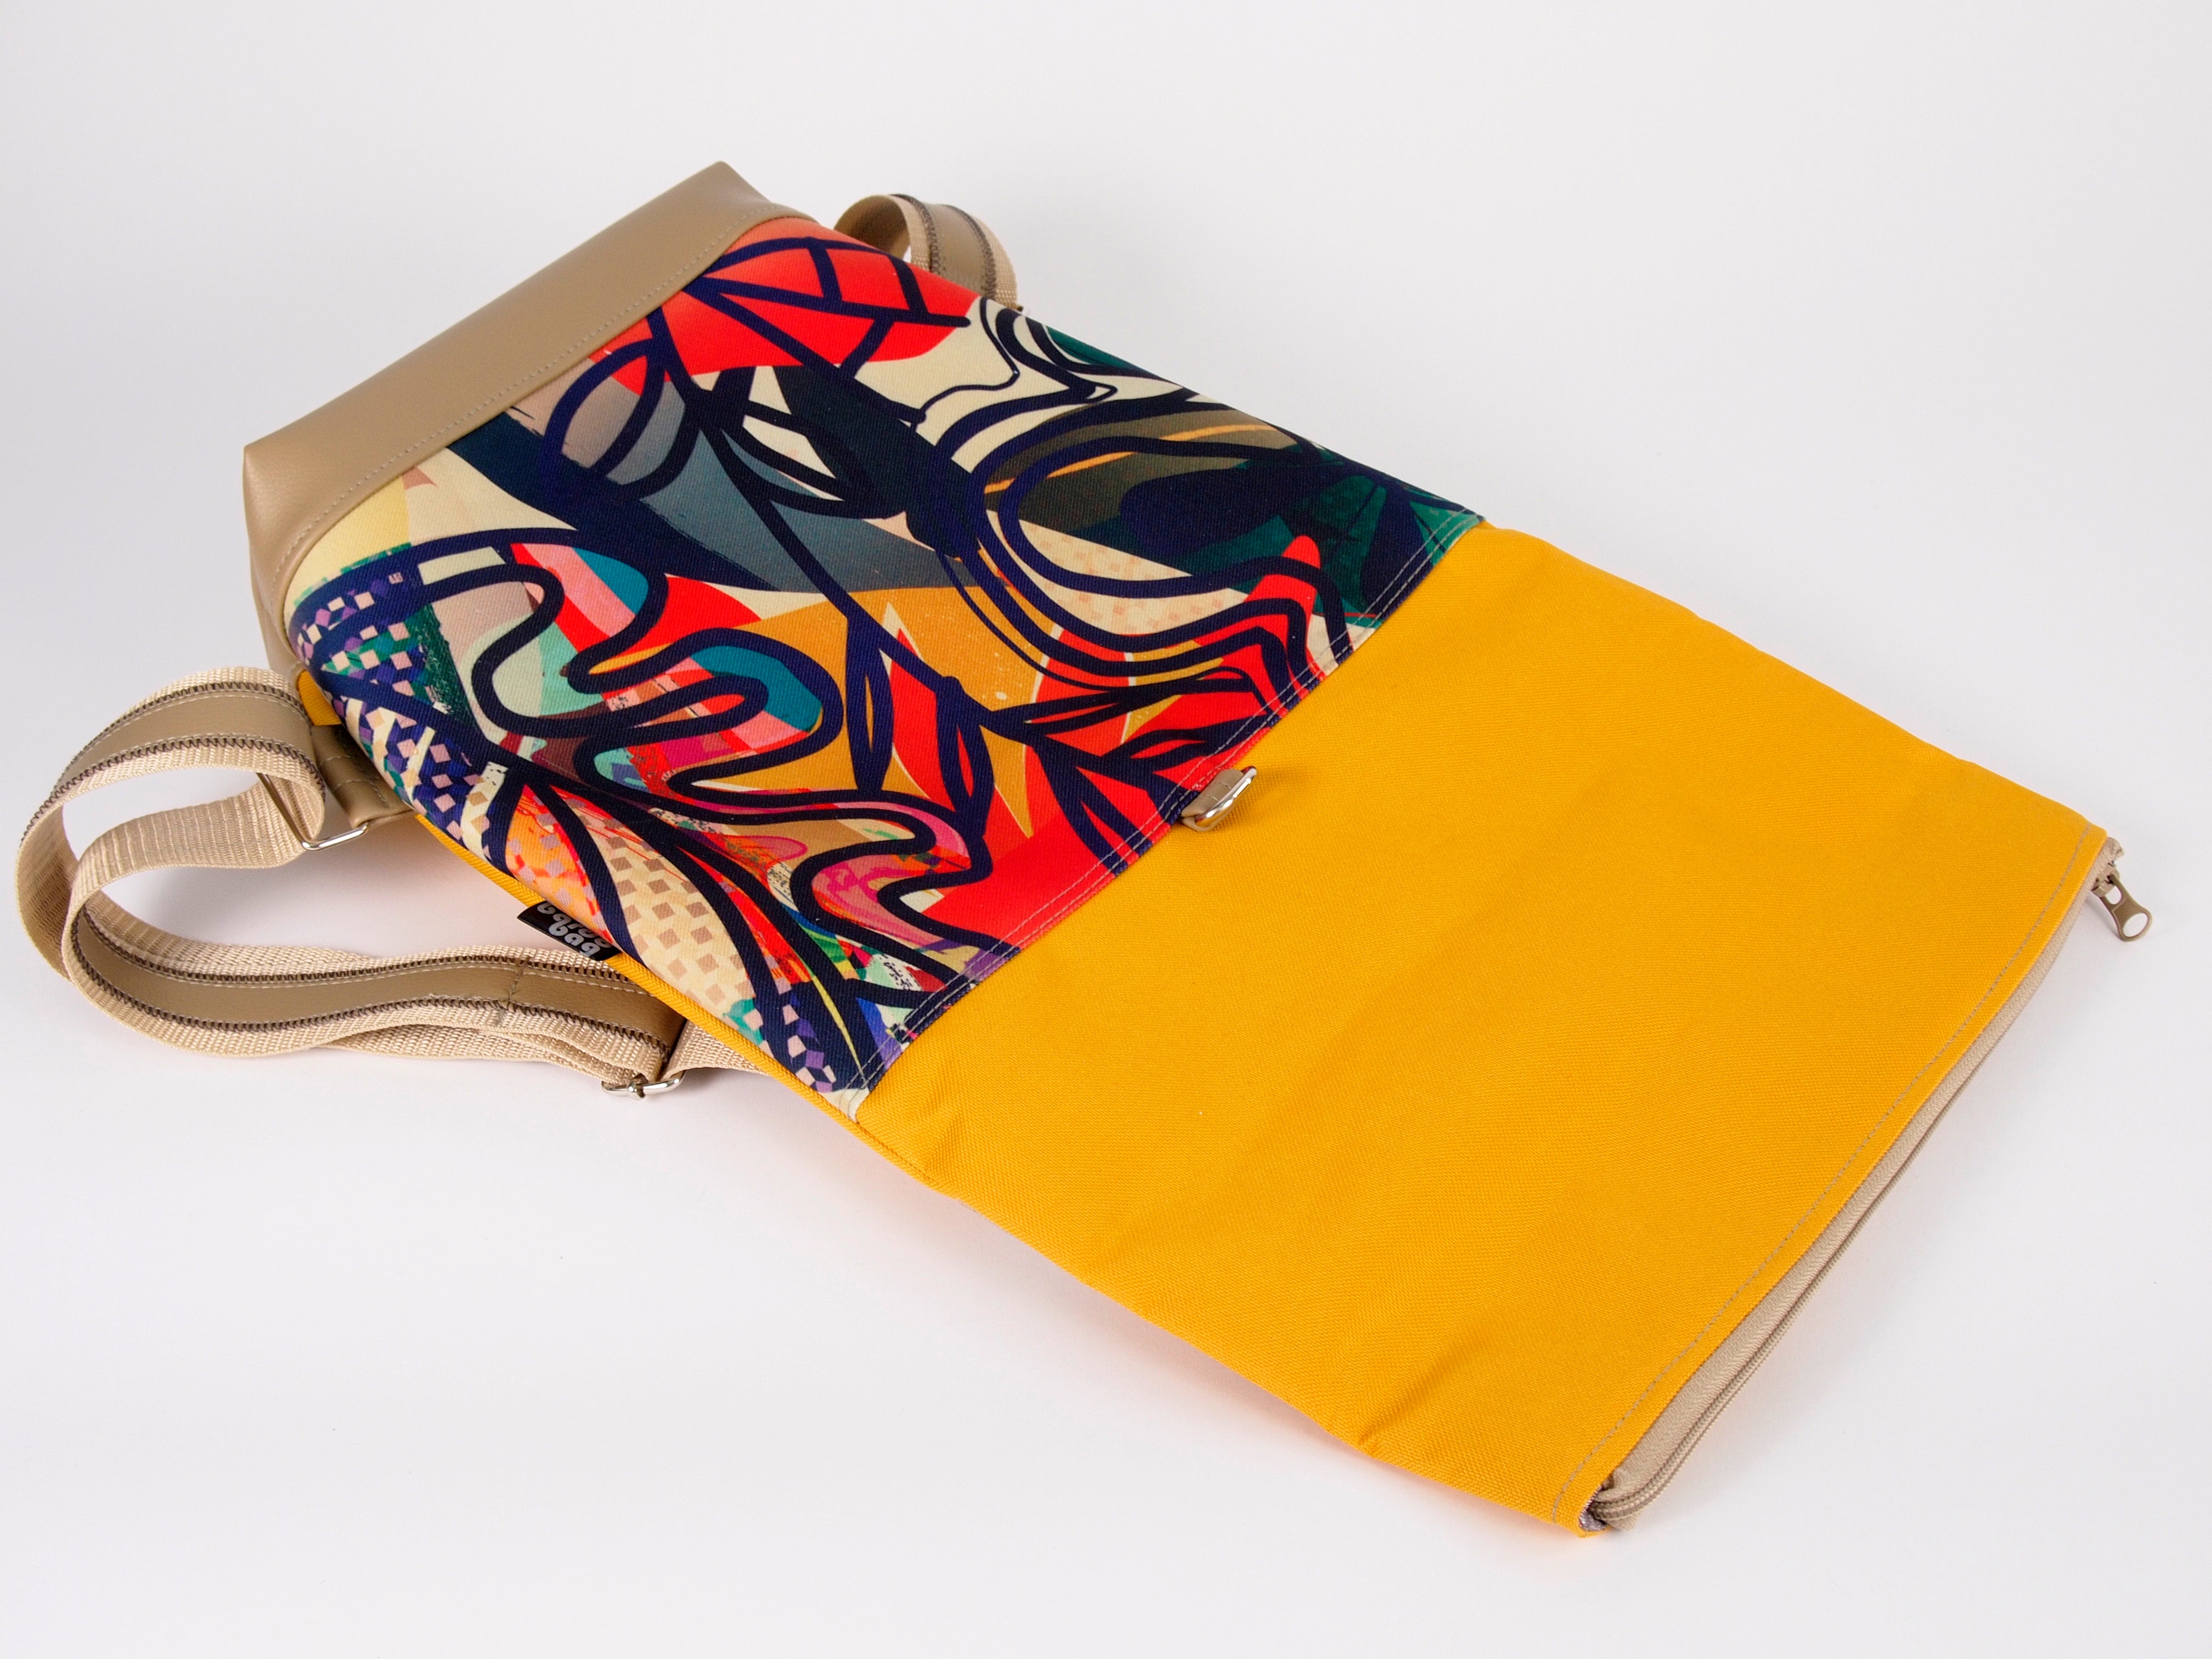 Bardo roll backpack - Summer abstraction - Premium Bardo backpack from BARDO ART WORKS - Just lvabstract, art, backpack, black, dance, dark blue, gift, handemade, jazz, orange, purple, red, tablet, urban style, vegan leather, woman85.00! Shop now at BARDO ART WORKS